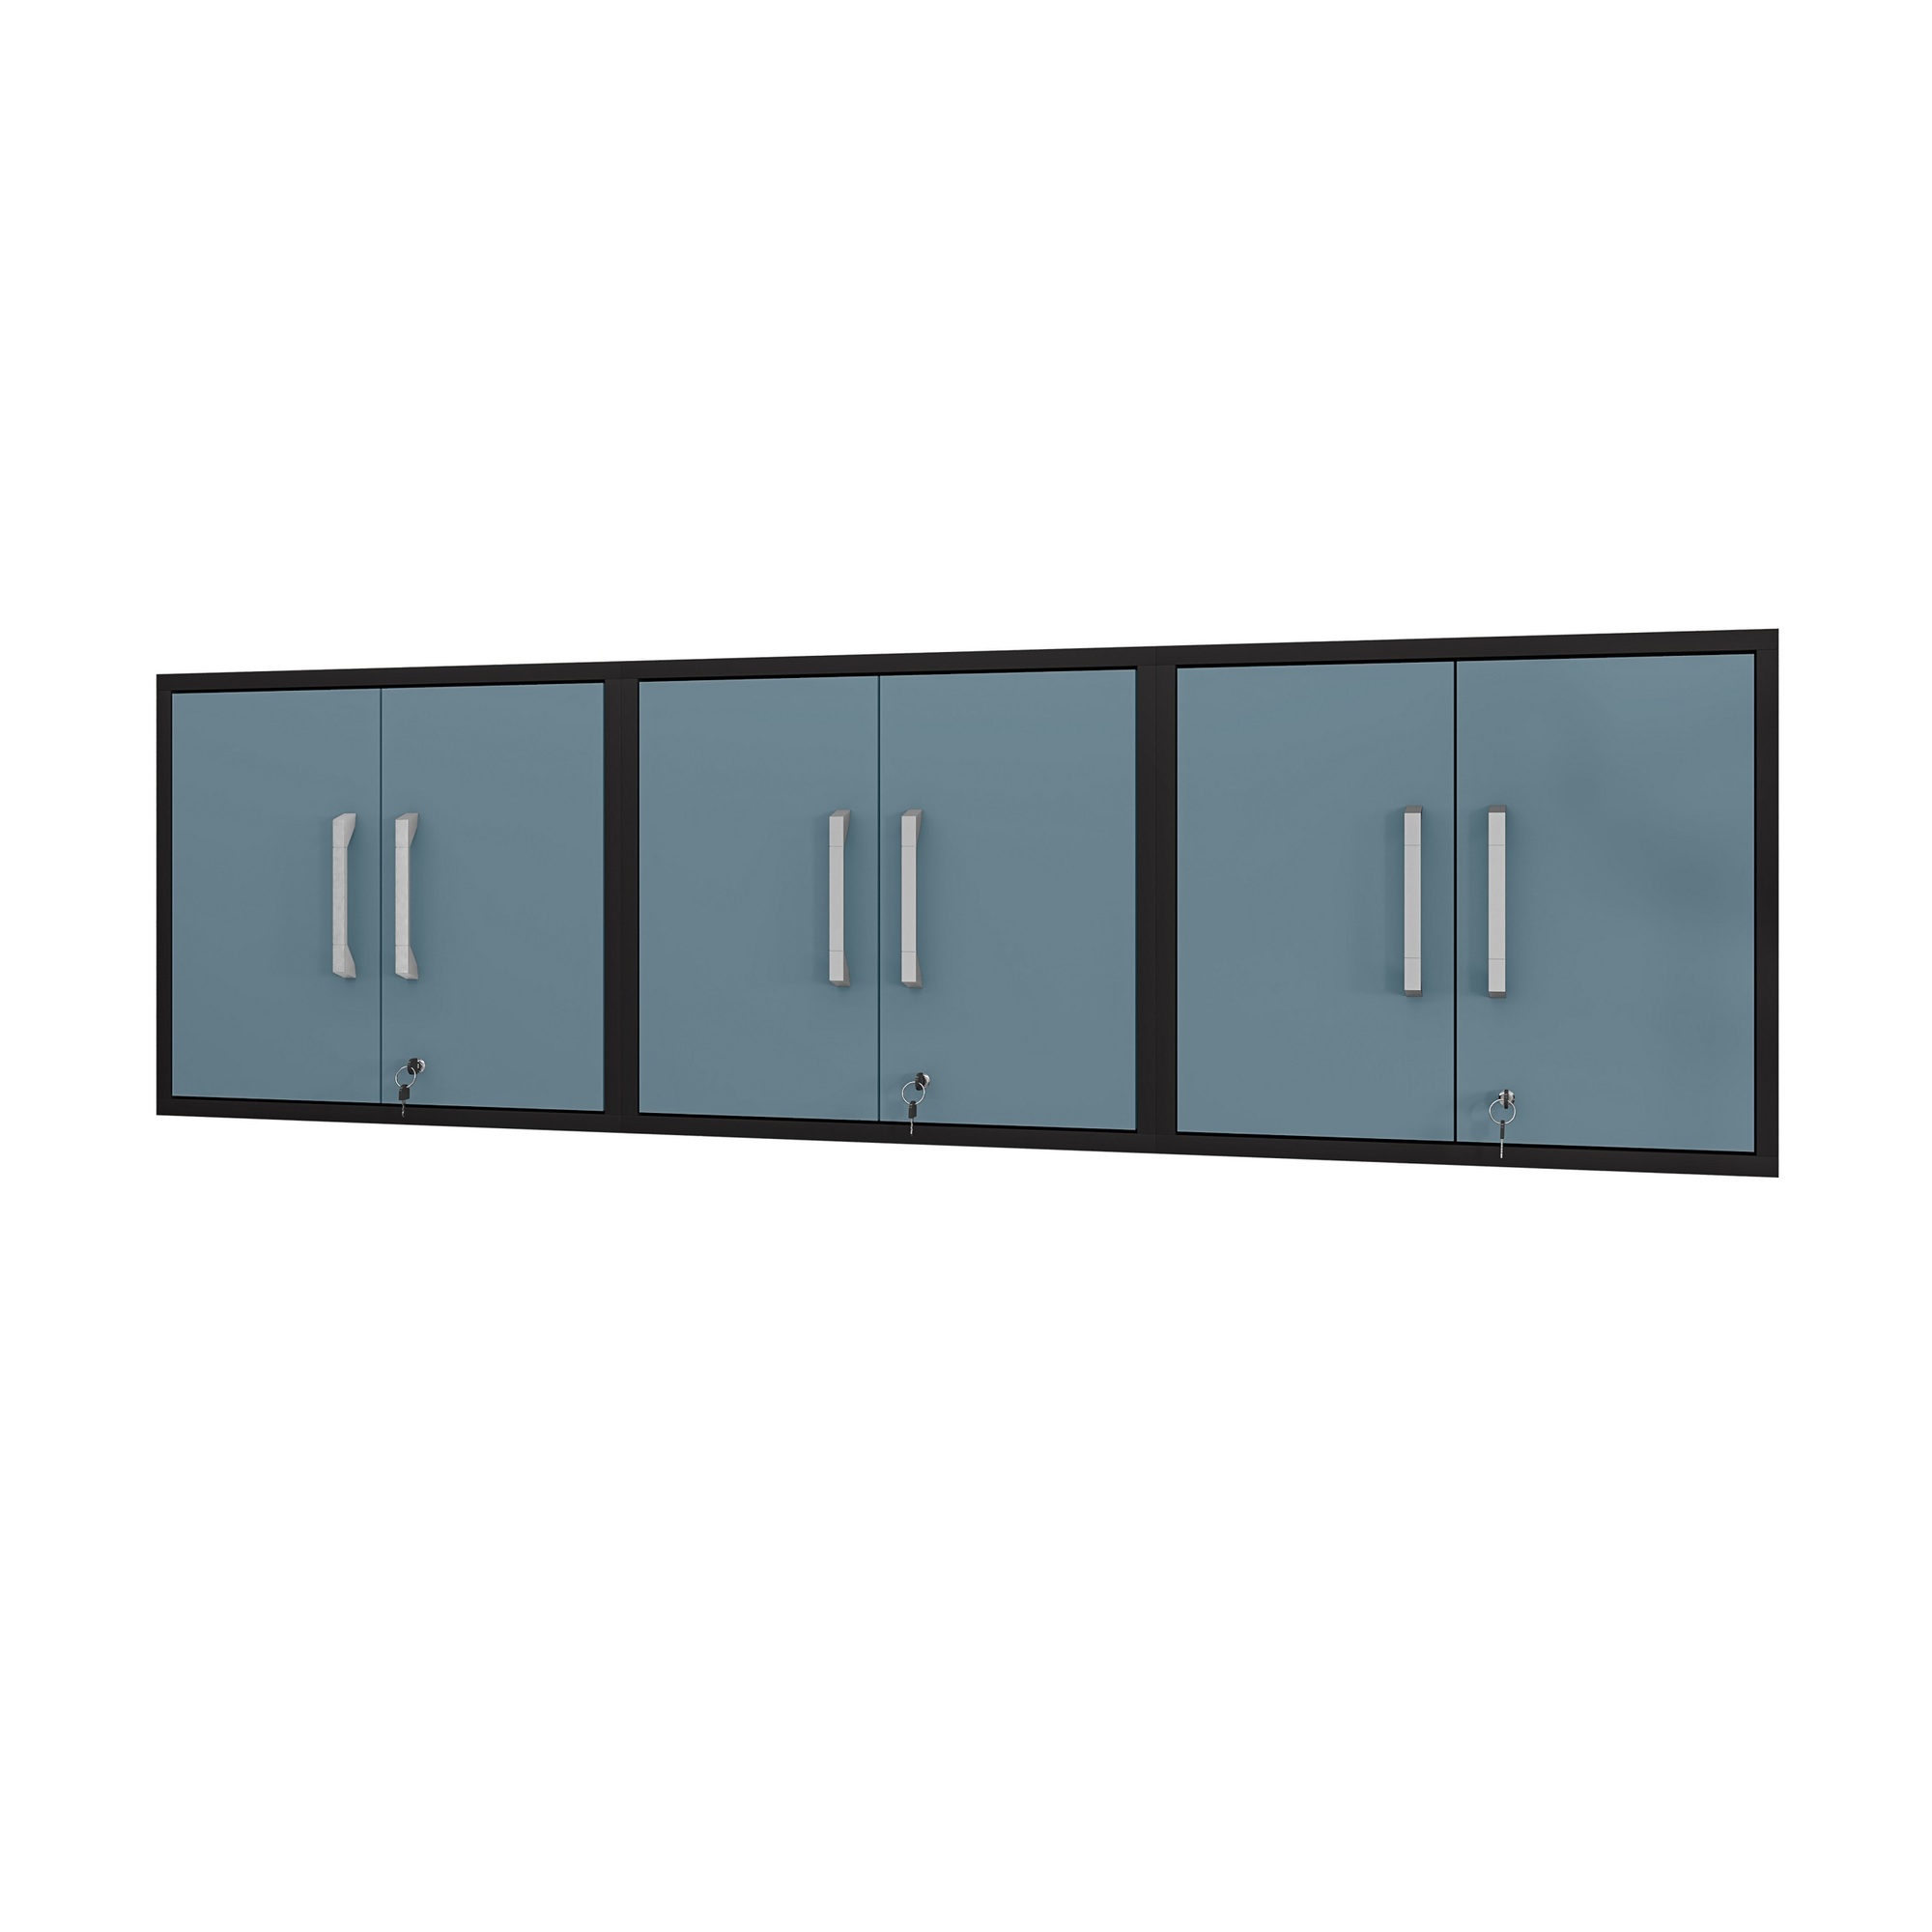 Manhattan Comfort, Eiffel Floating Garage Cabinet, Black Aqua Set 3 Height 25.59 in, Width 85.05 in, Color Blue, Model 3-251BMC